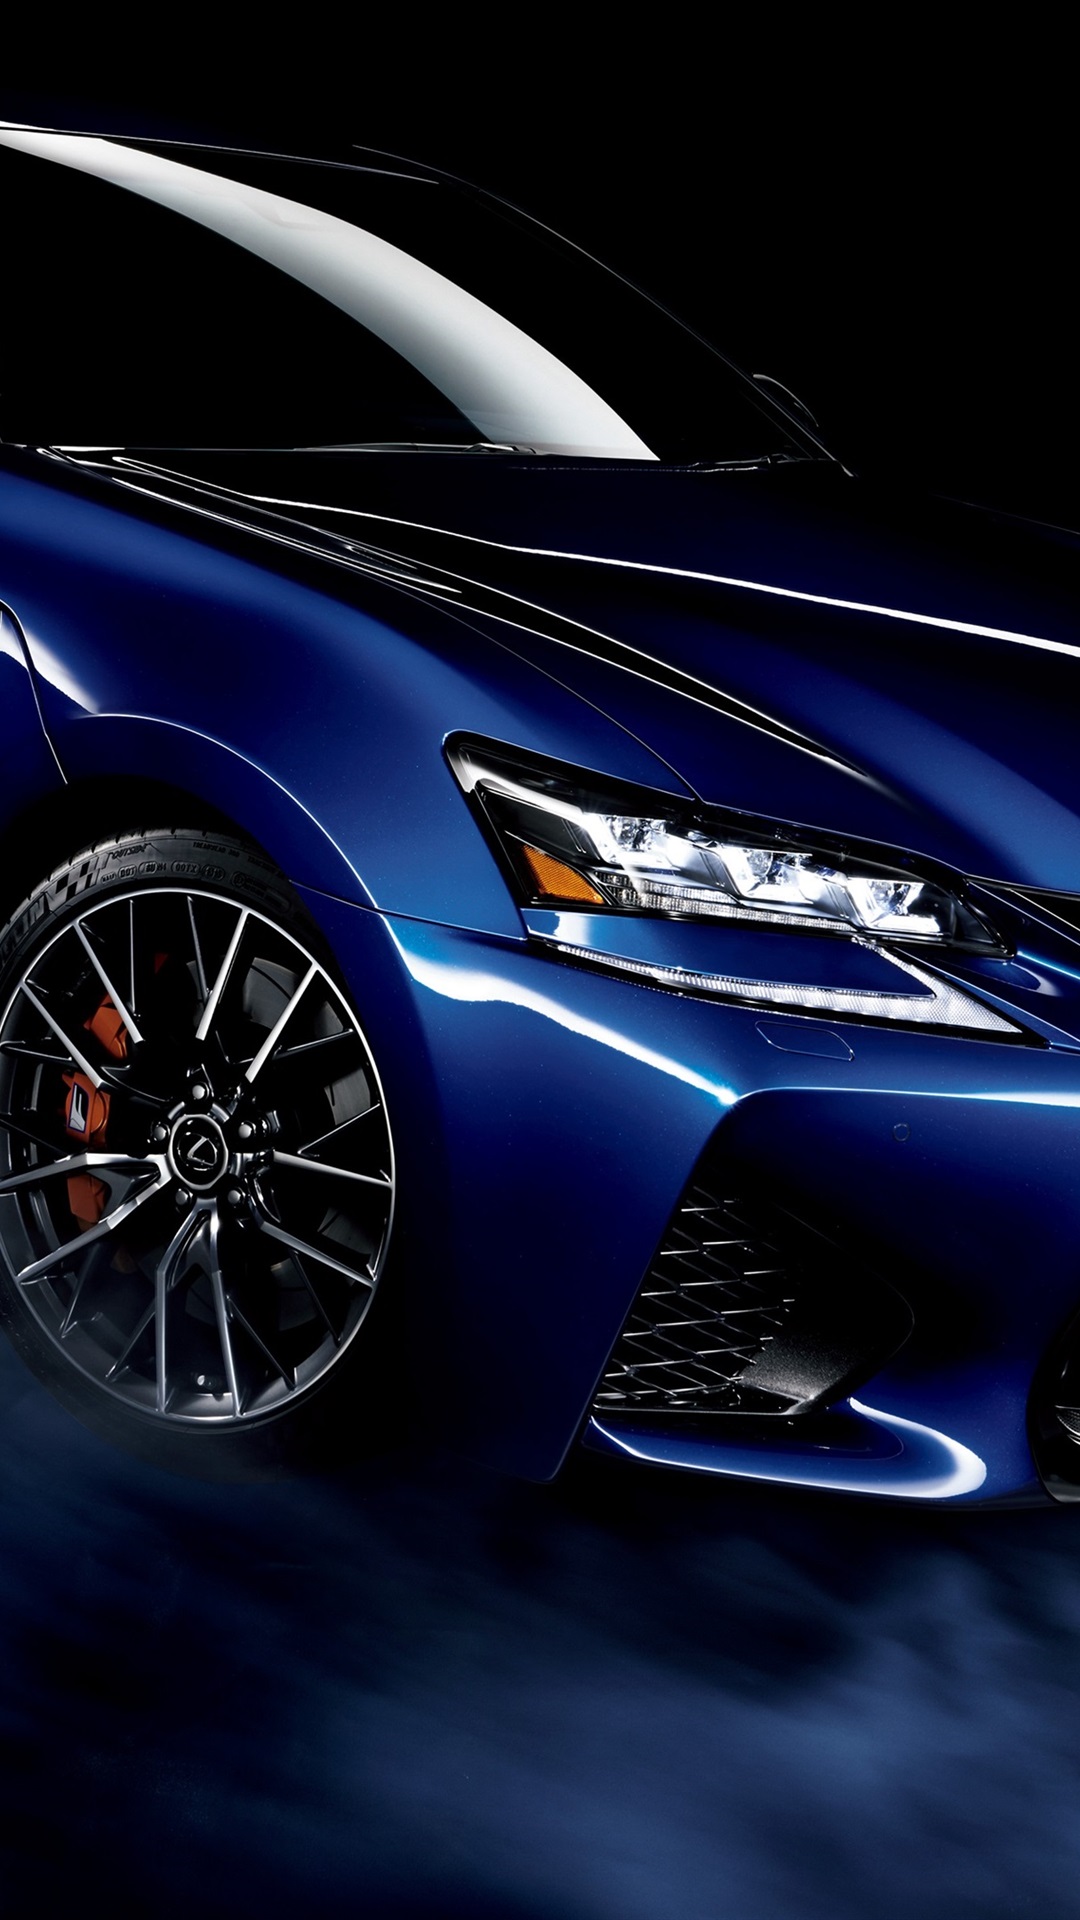 Lexus GS F Blue Car, Smoke, Black Background 1080x1920 IPhone 8 7 6 6S Plus Wallpaper, Background, Picture, Image